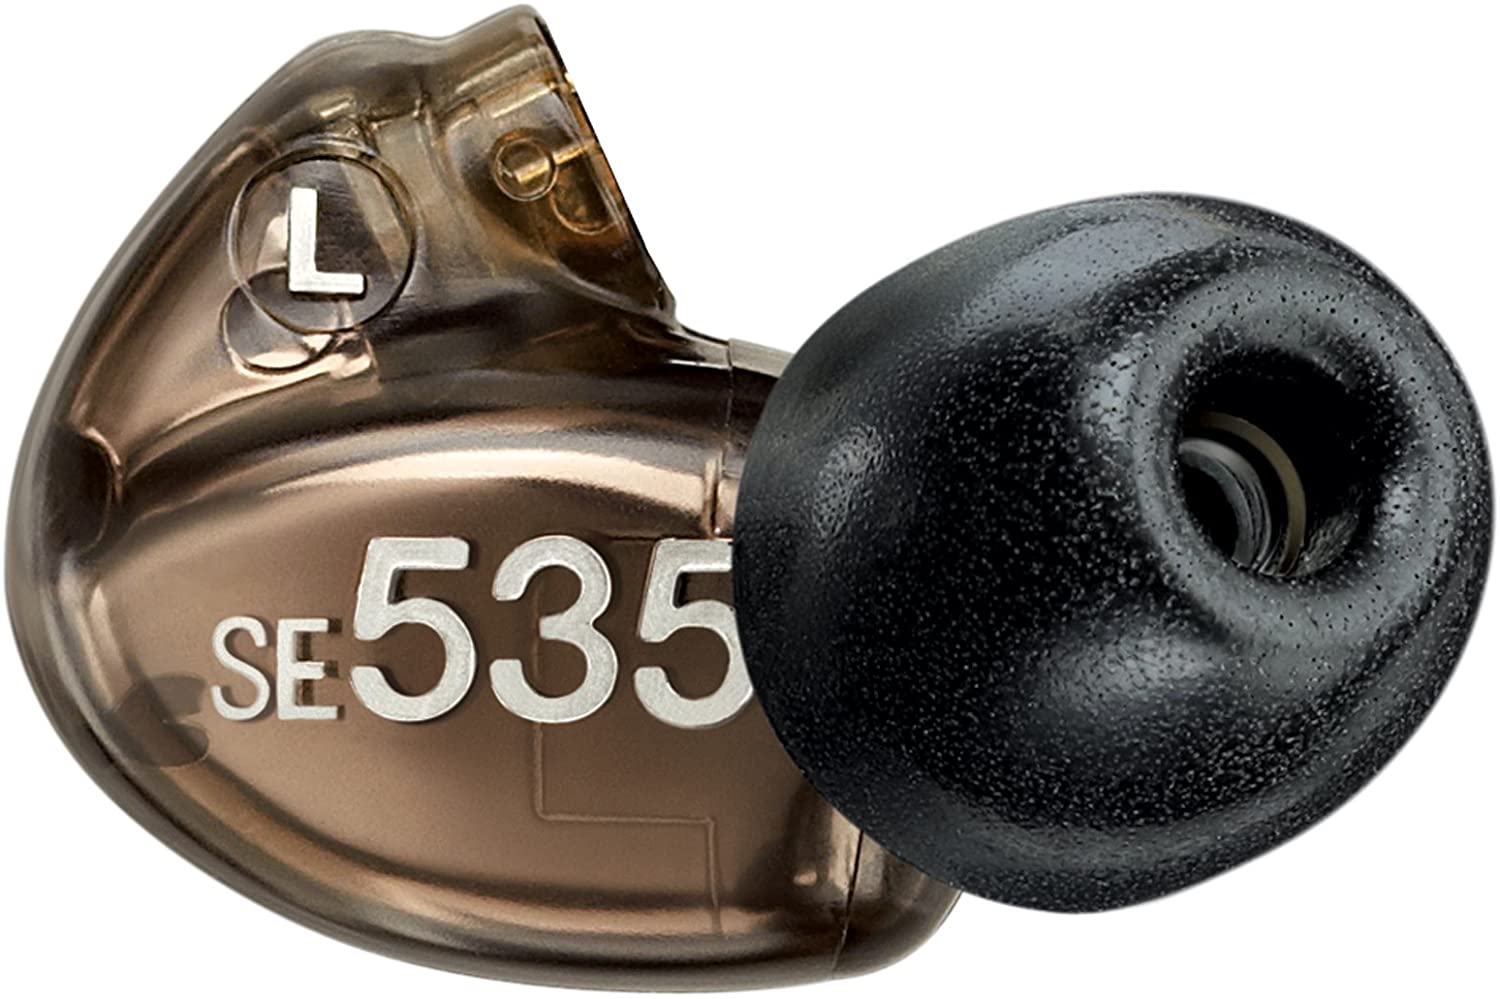 SHURE SE535-CL/V-LEFT/RIGHT - צד ימין / שמאל של אוזנייה SE535 שקופה למחצה או בצבע ברונזה